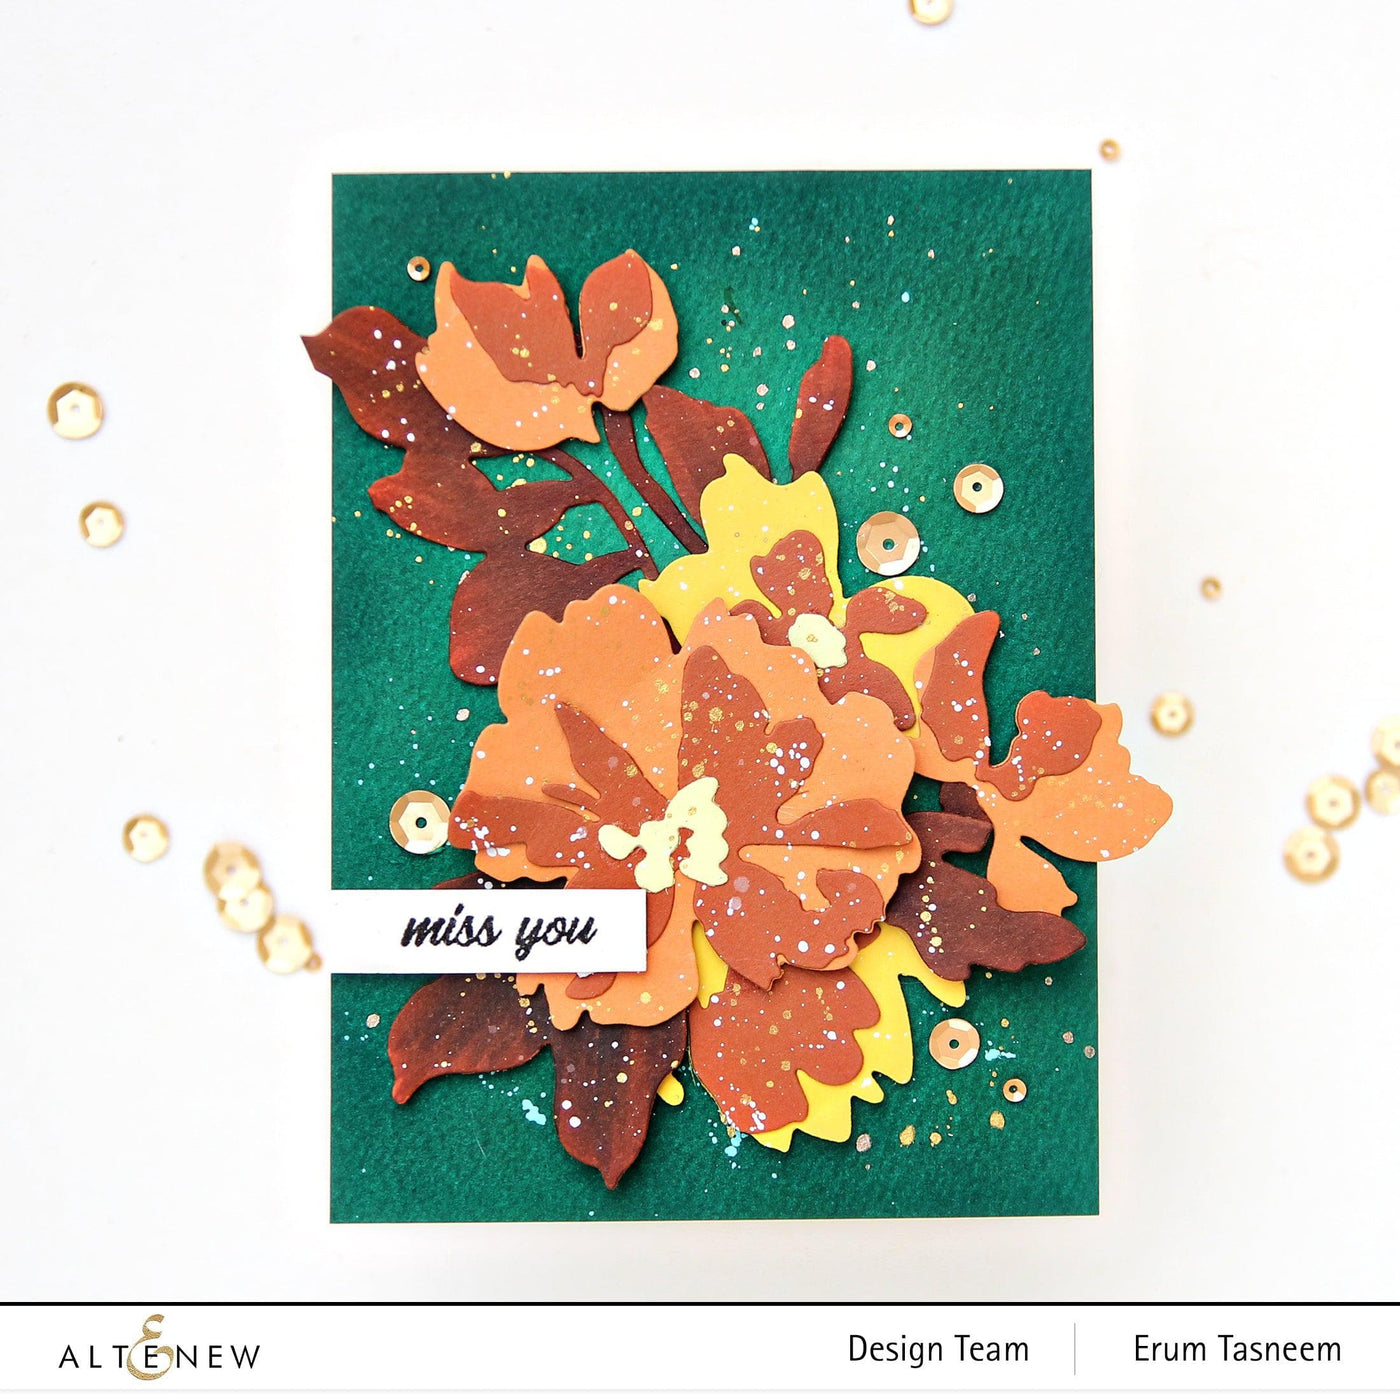 Altenew Creativity Kit Bundle Sassy Slimline Cards Creativity Cardmaking Kit